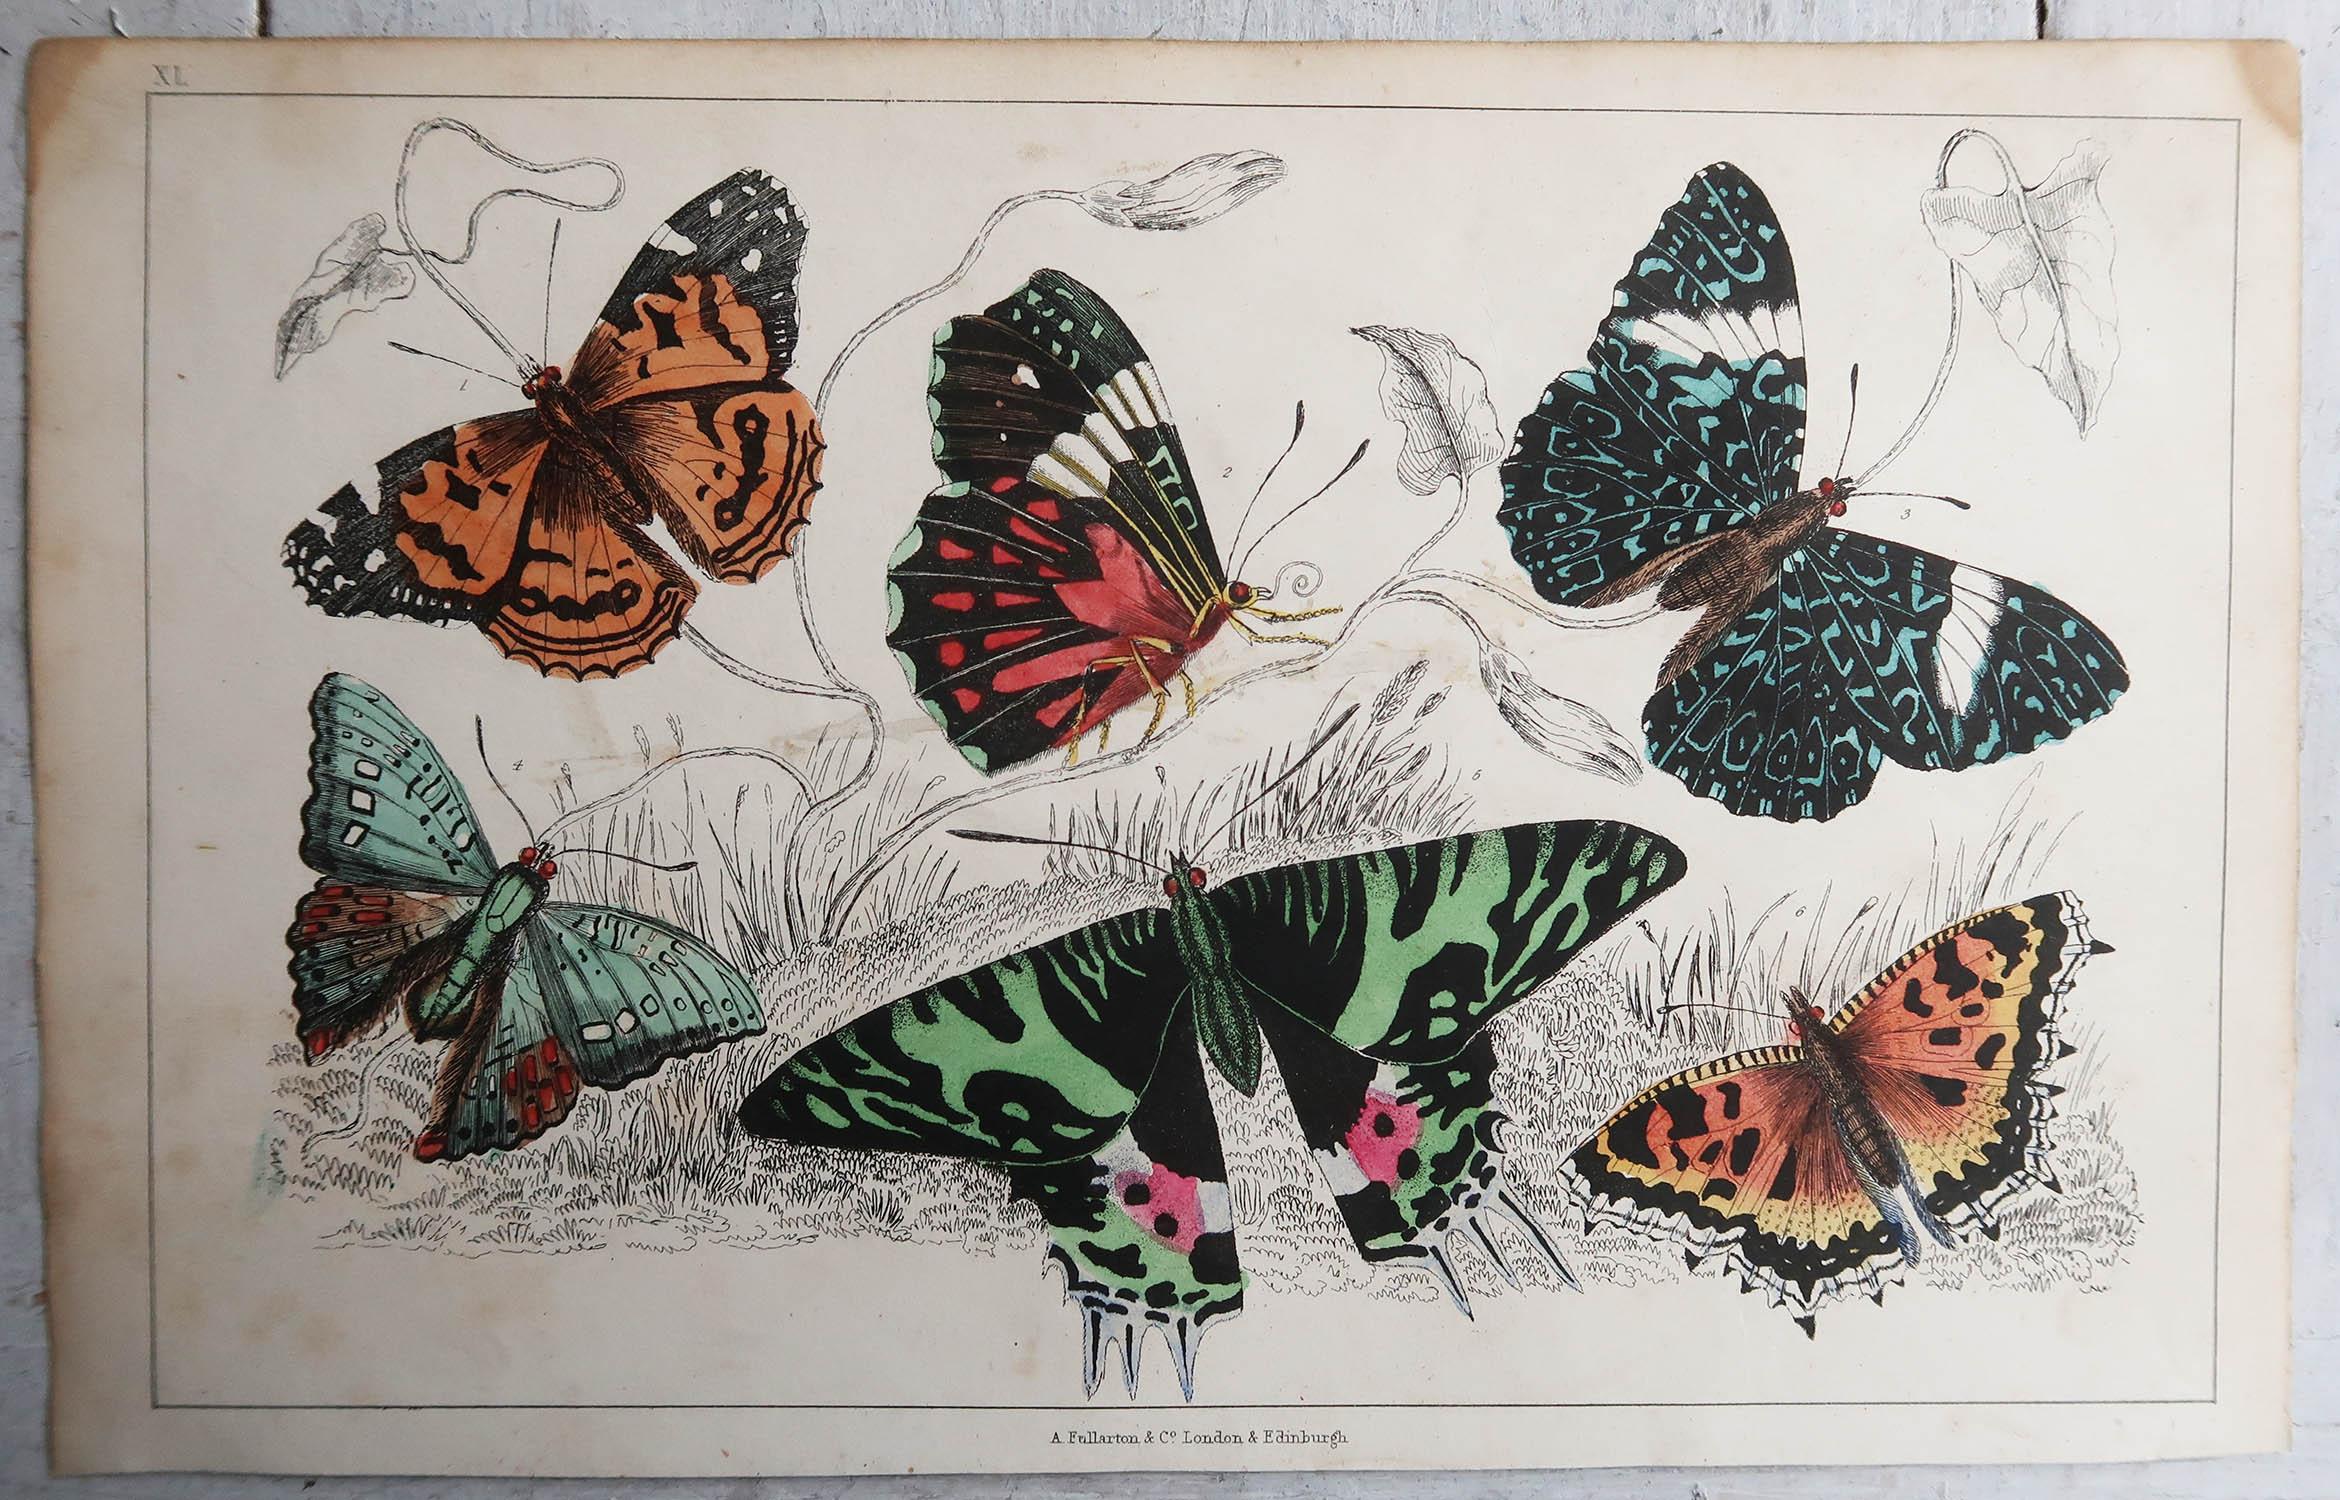 English Original Antique Print of Butterflies, 1847, Unframed For Sale